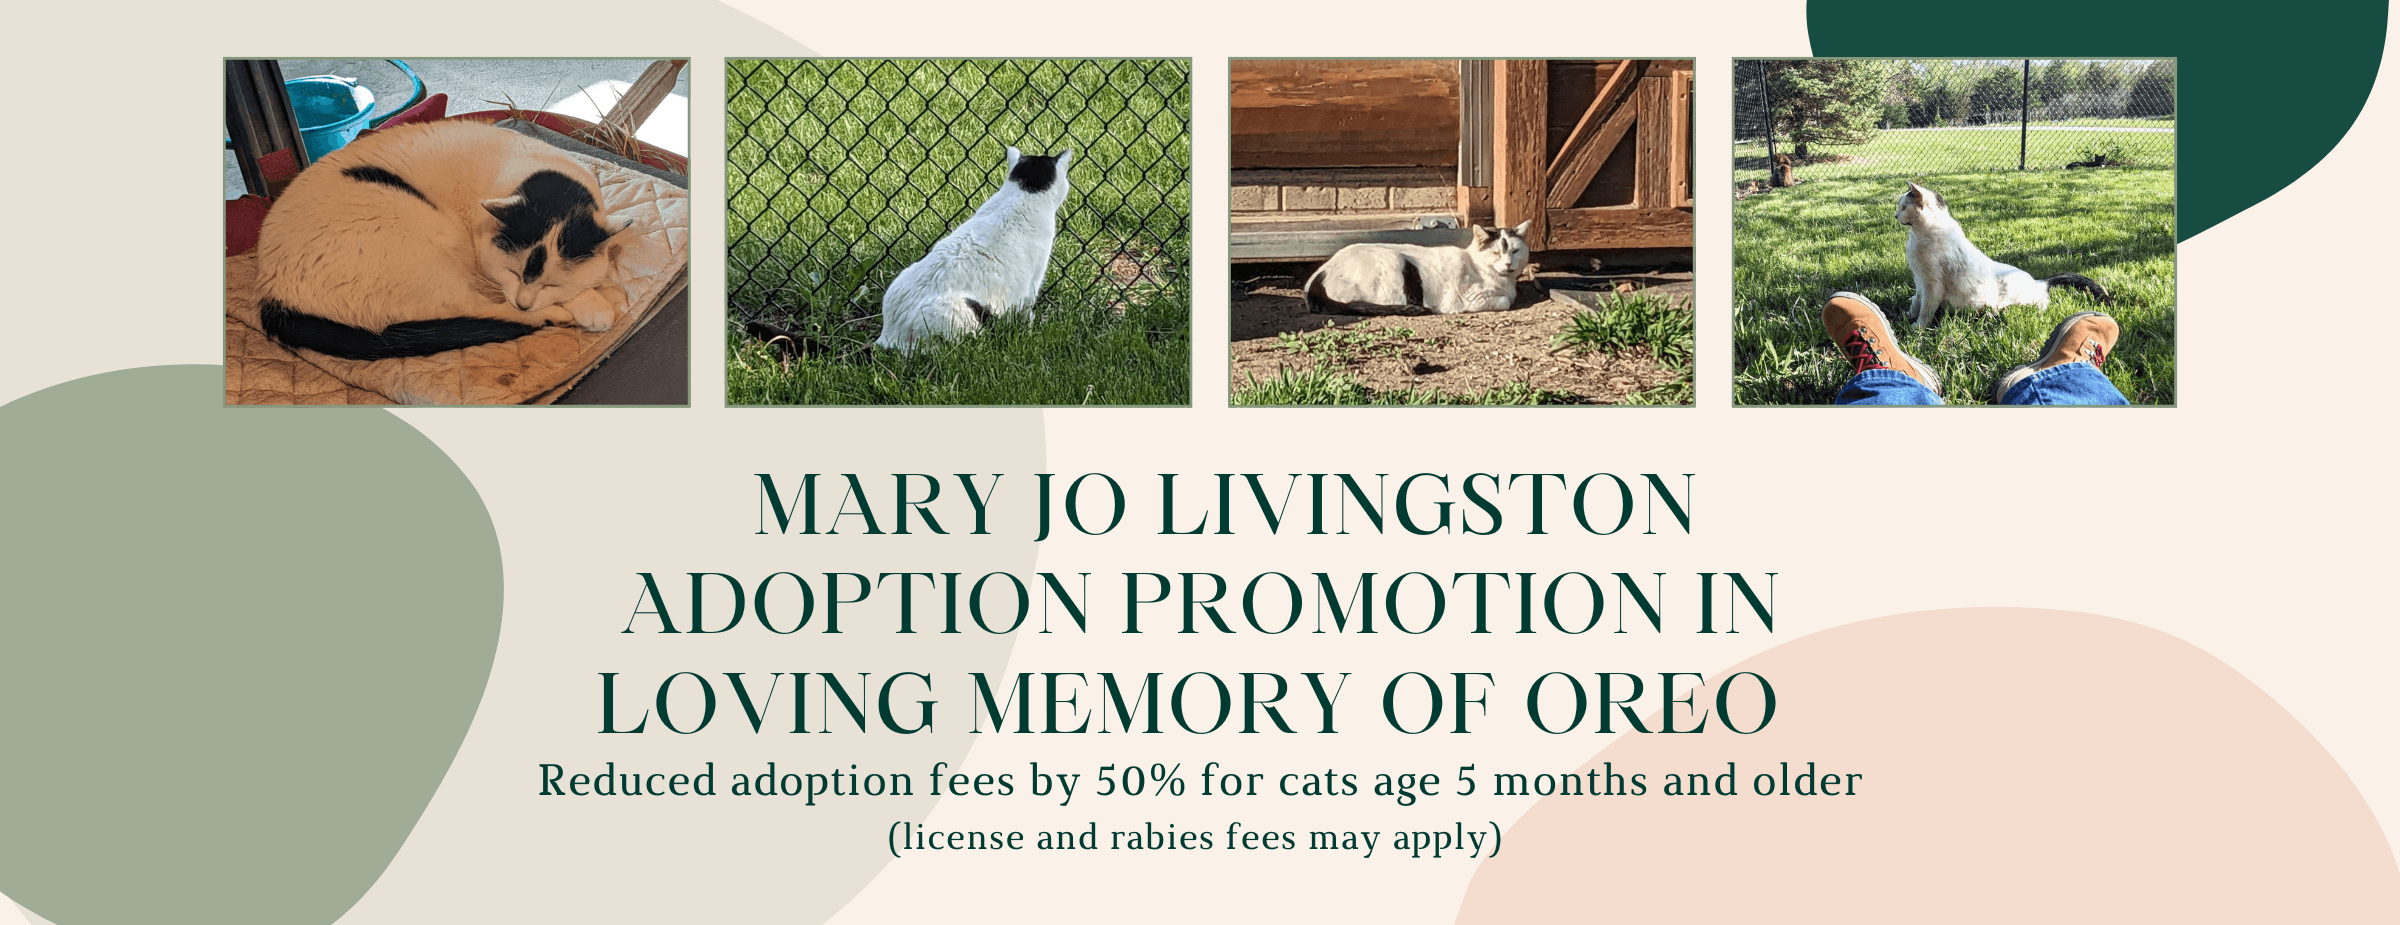 Mary Jo Livingston Adoption Promotion